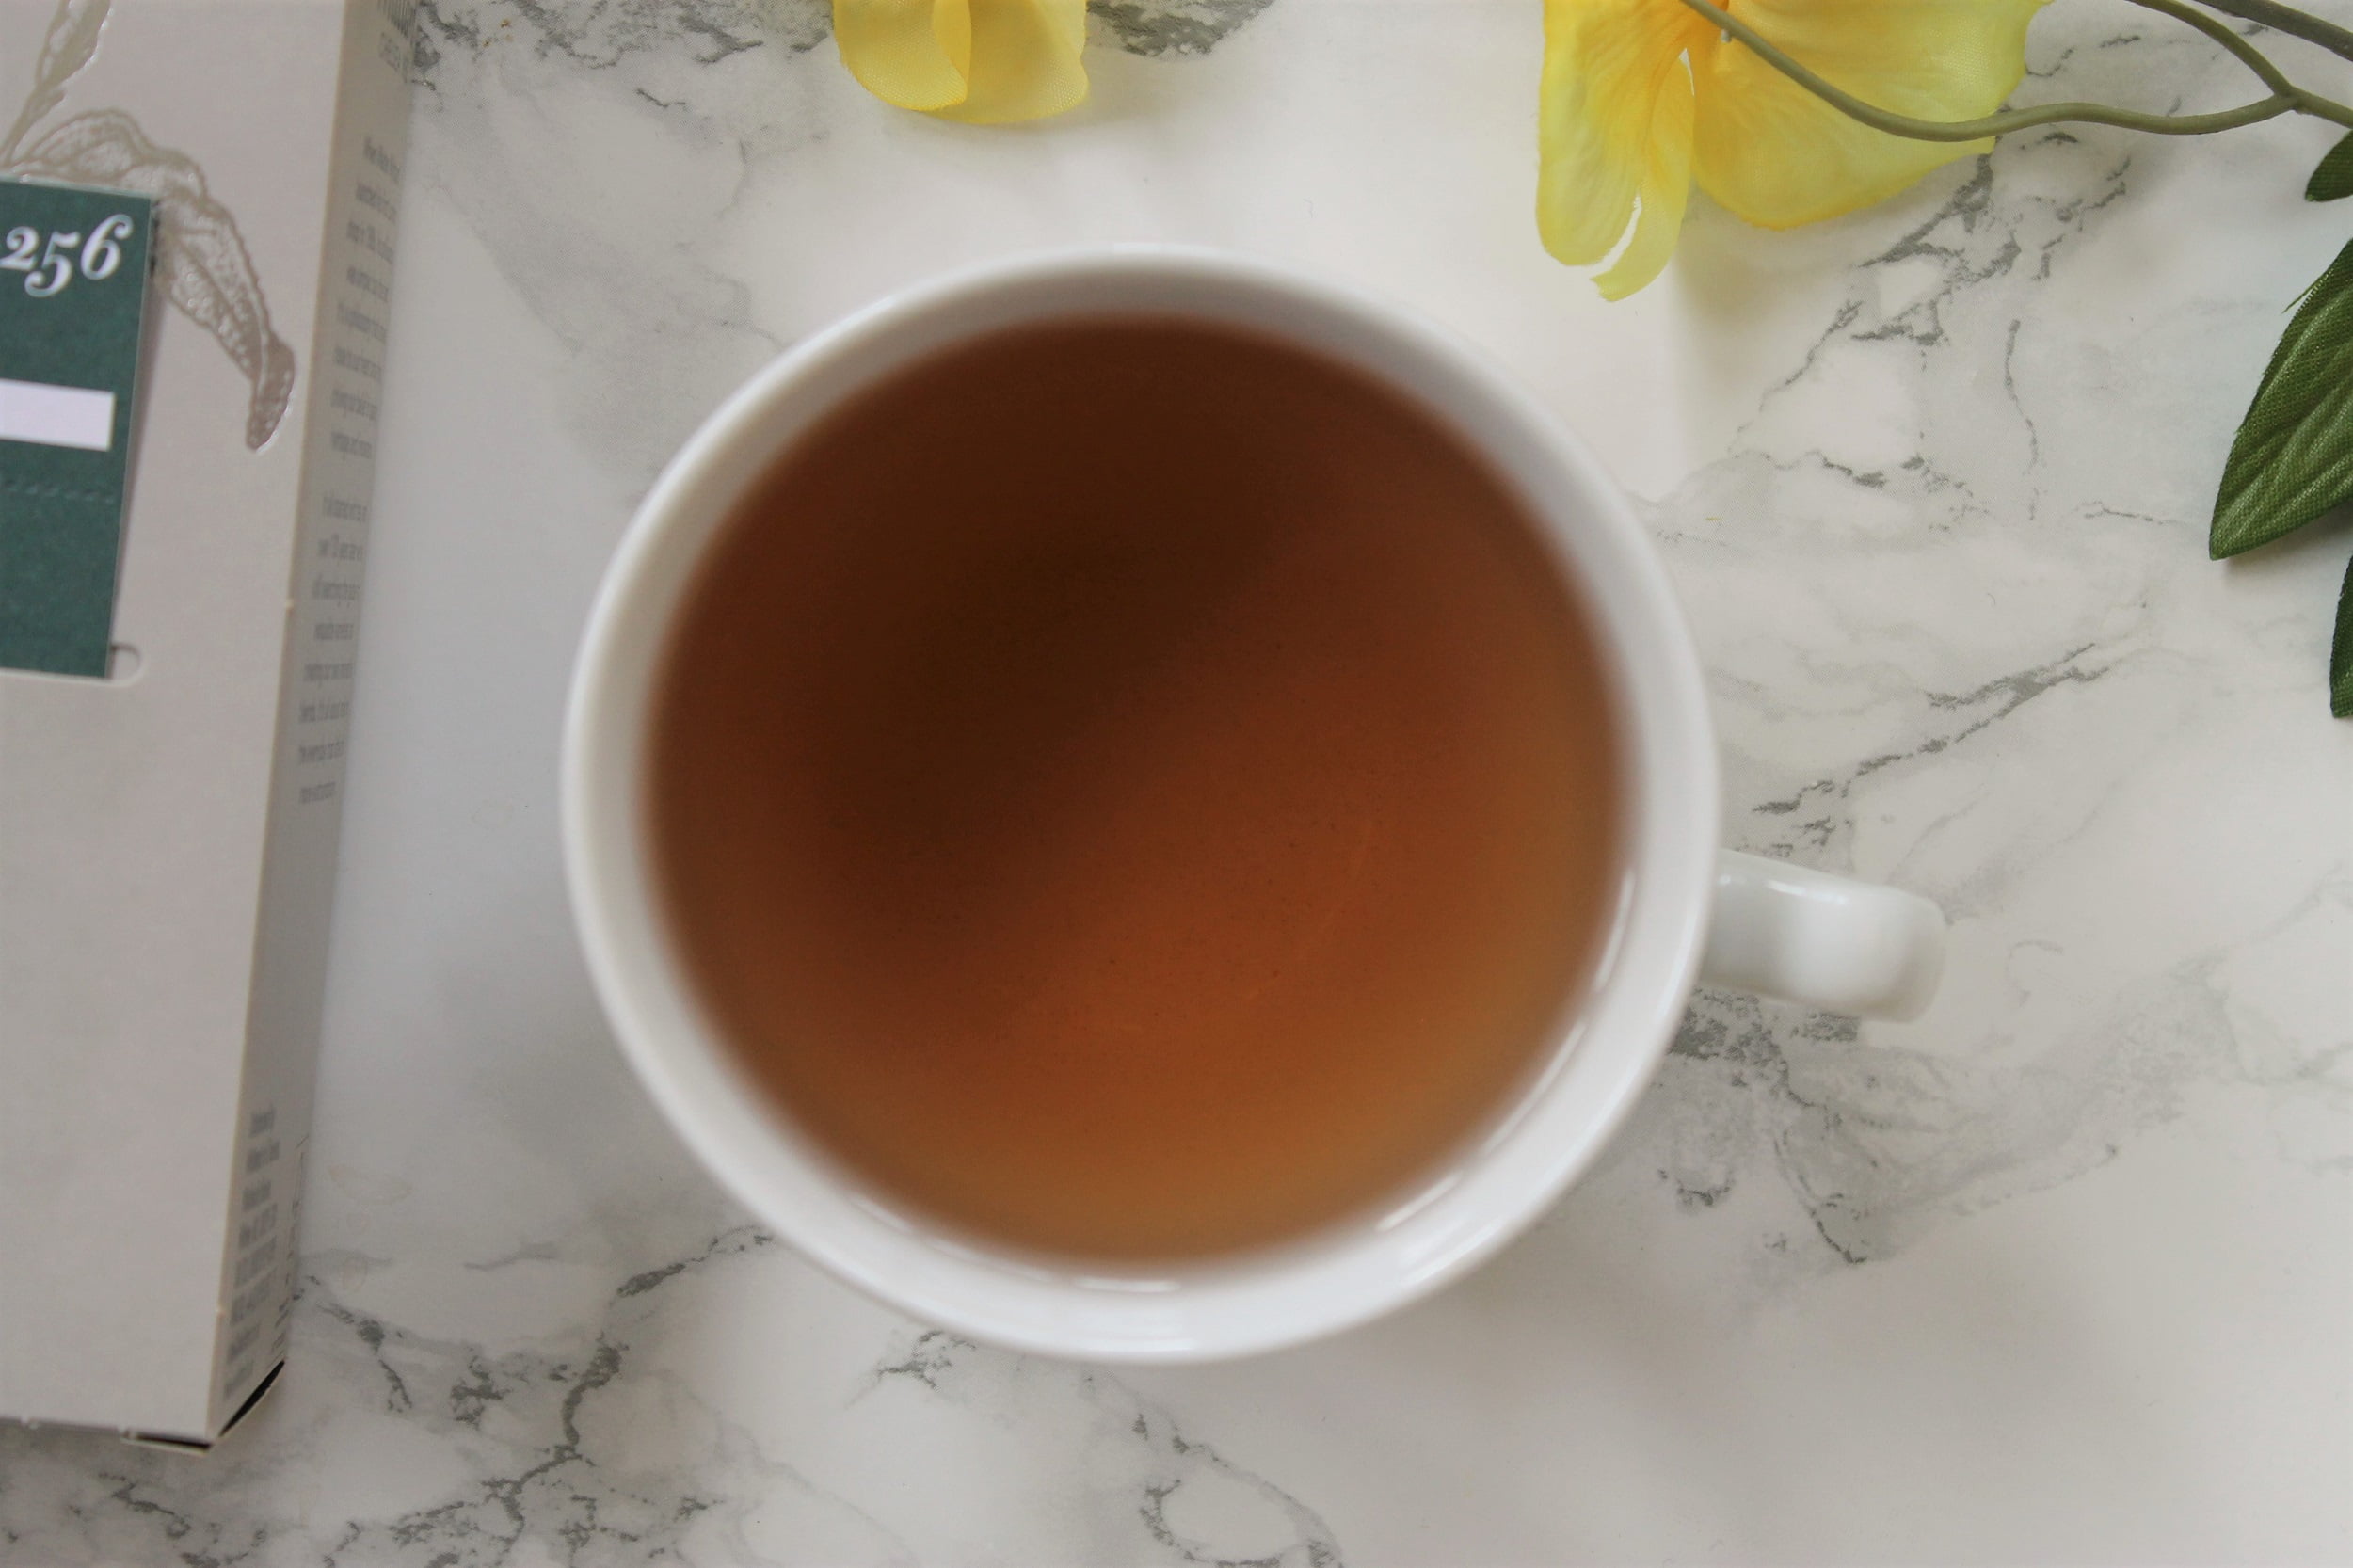 pink tea in white teacup